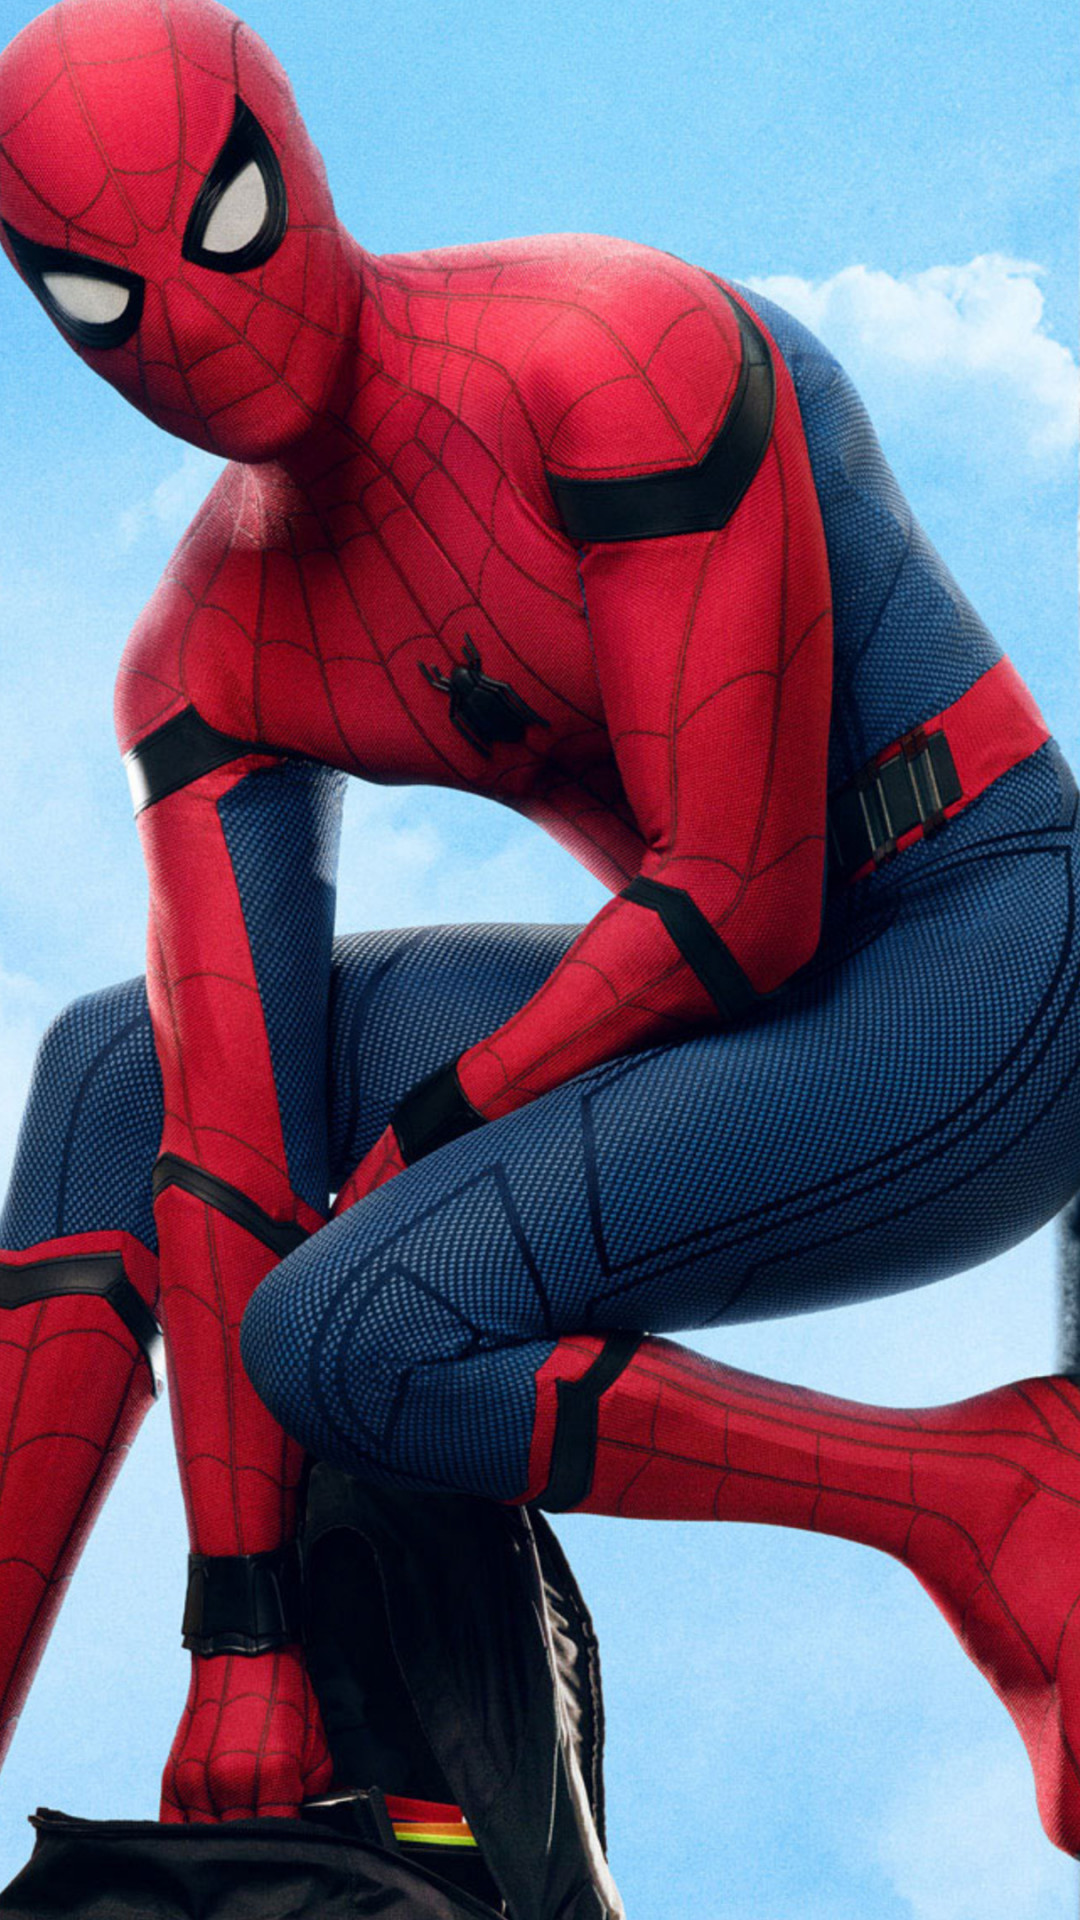 Wallpaper Spider-Man: Homecoming, 4k, Movies #140811080 x 1920